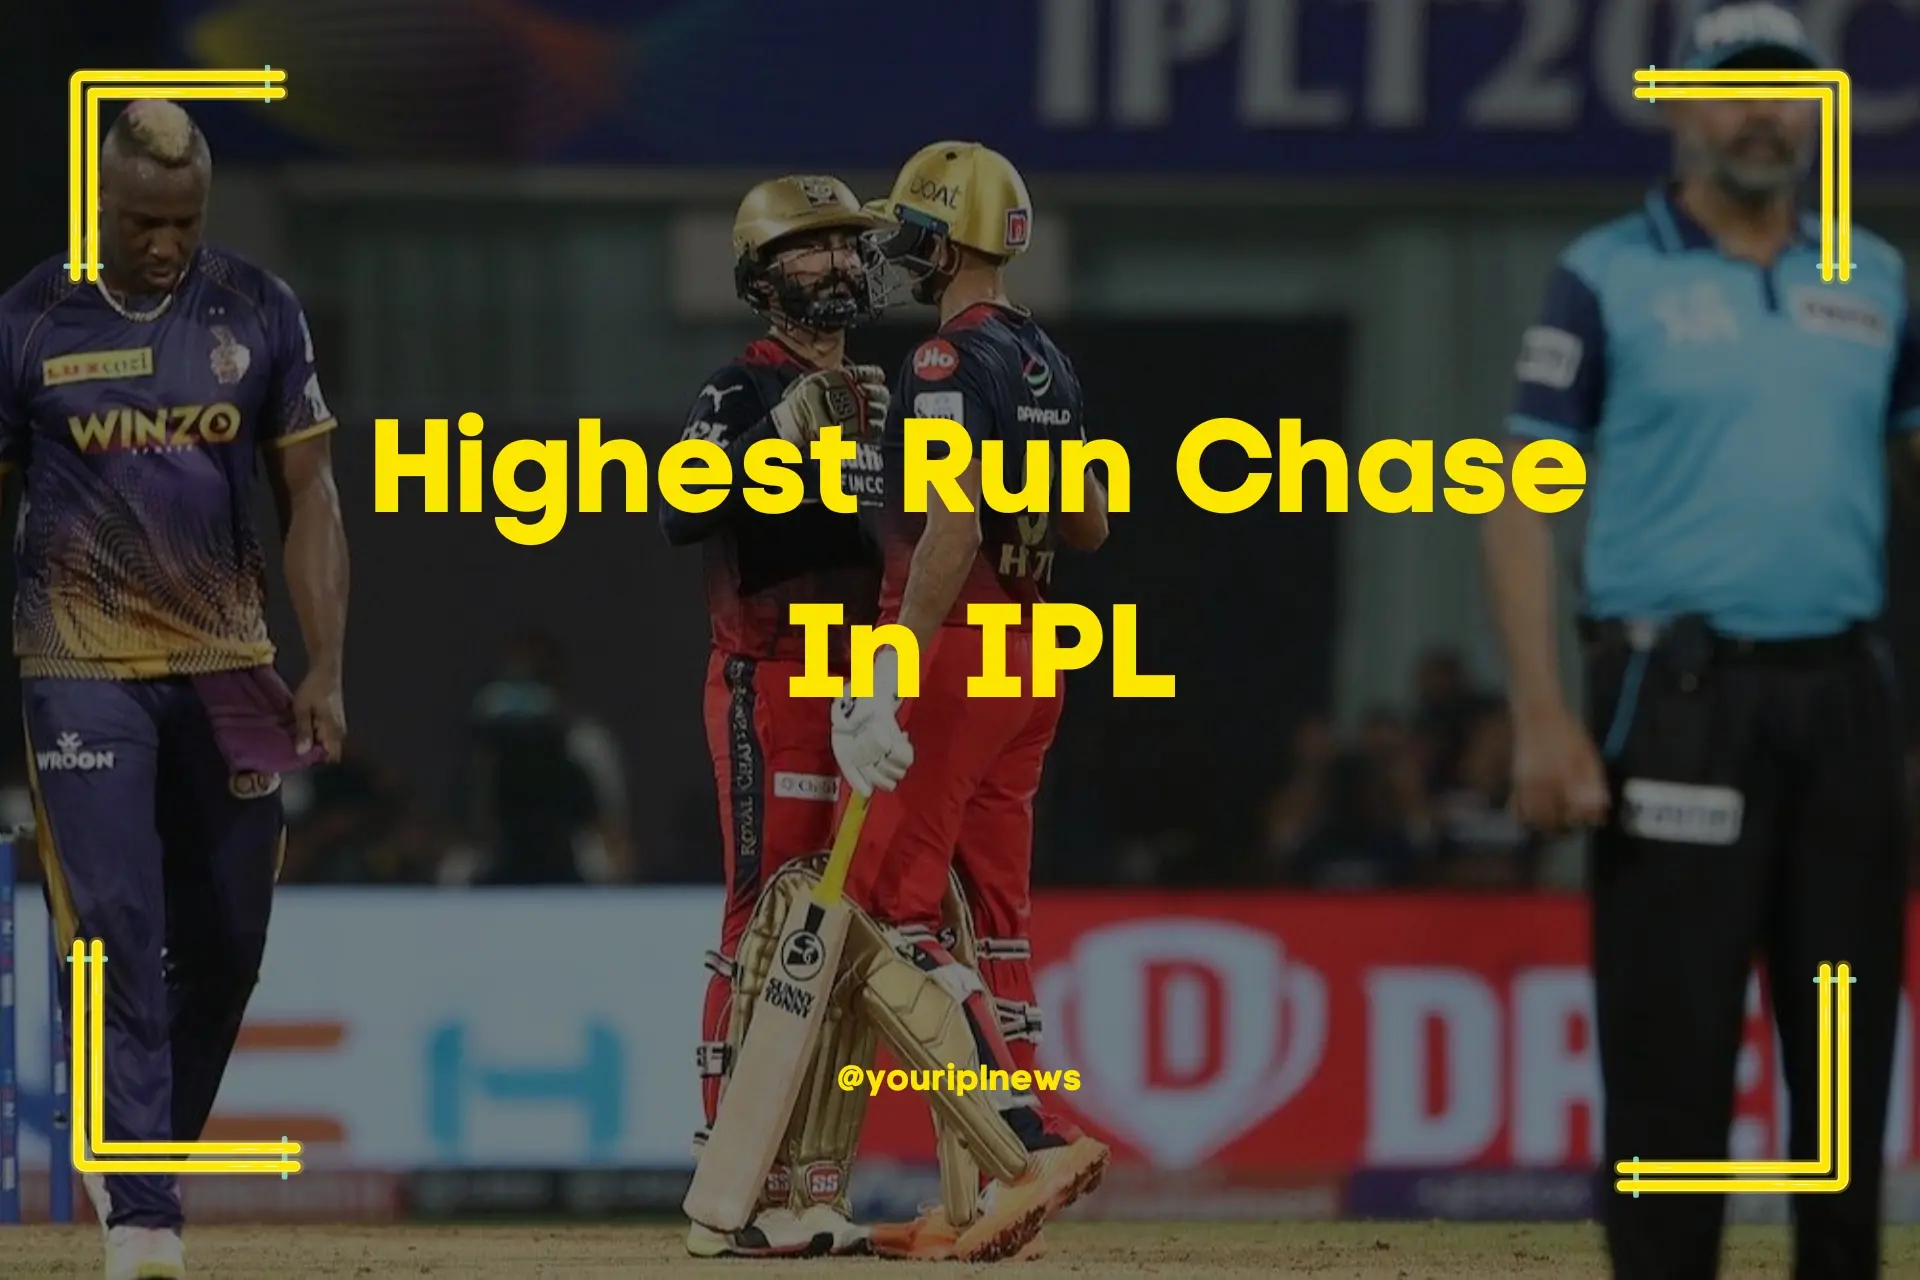 Highest Run Chase In IPL